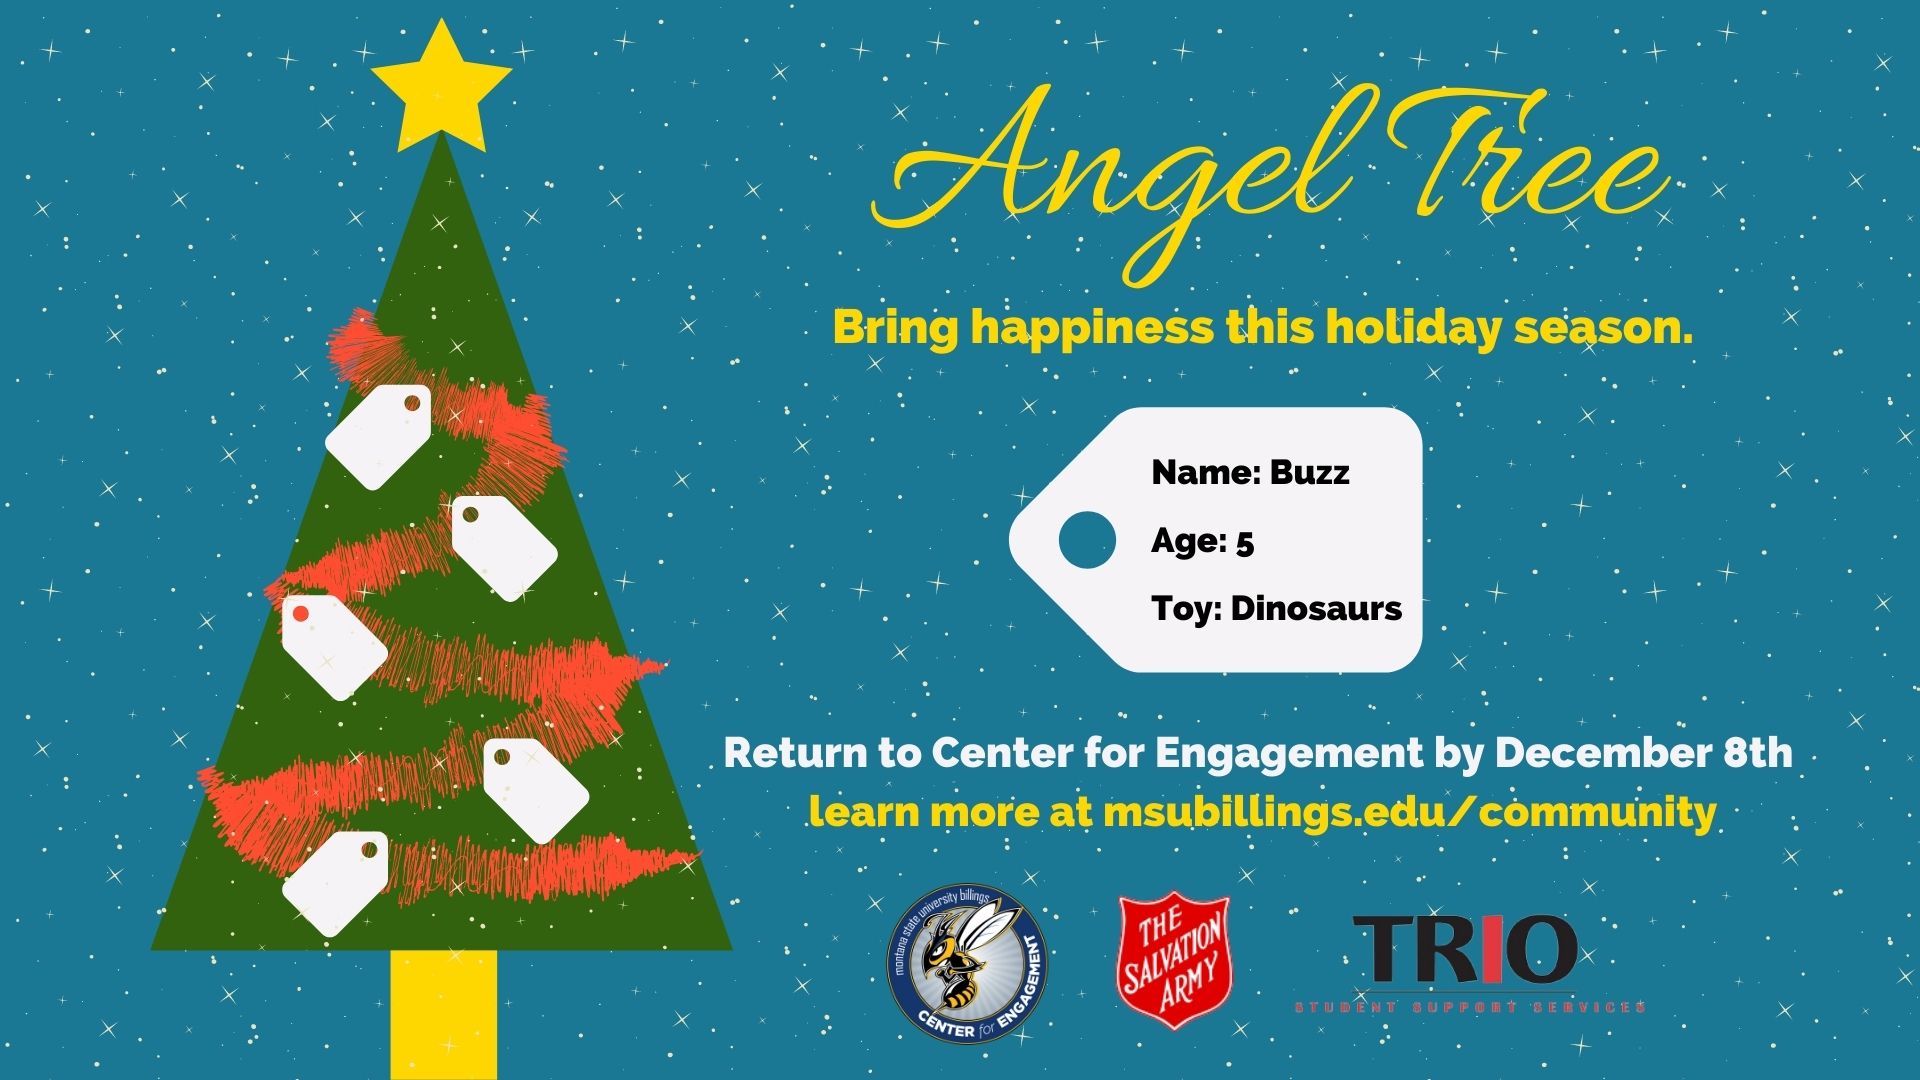 Angel Tree. Bring happiness this holiday season.